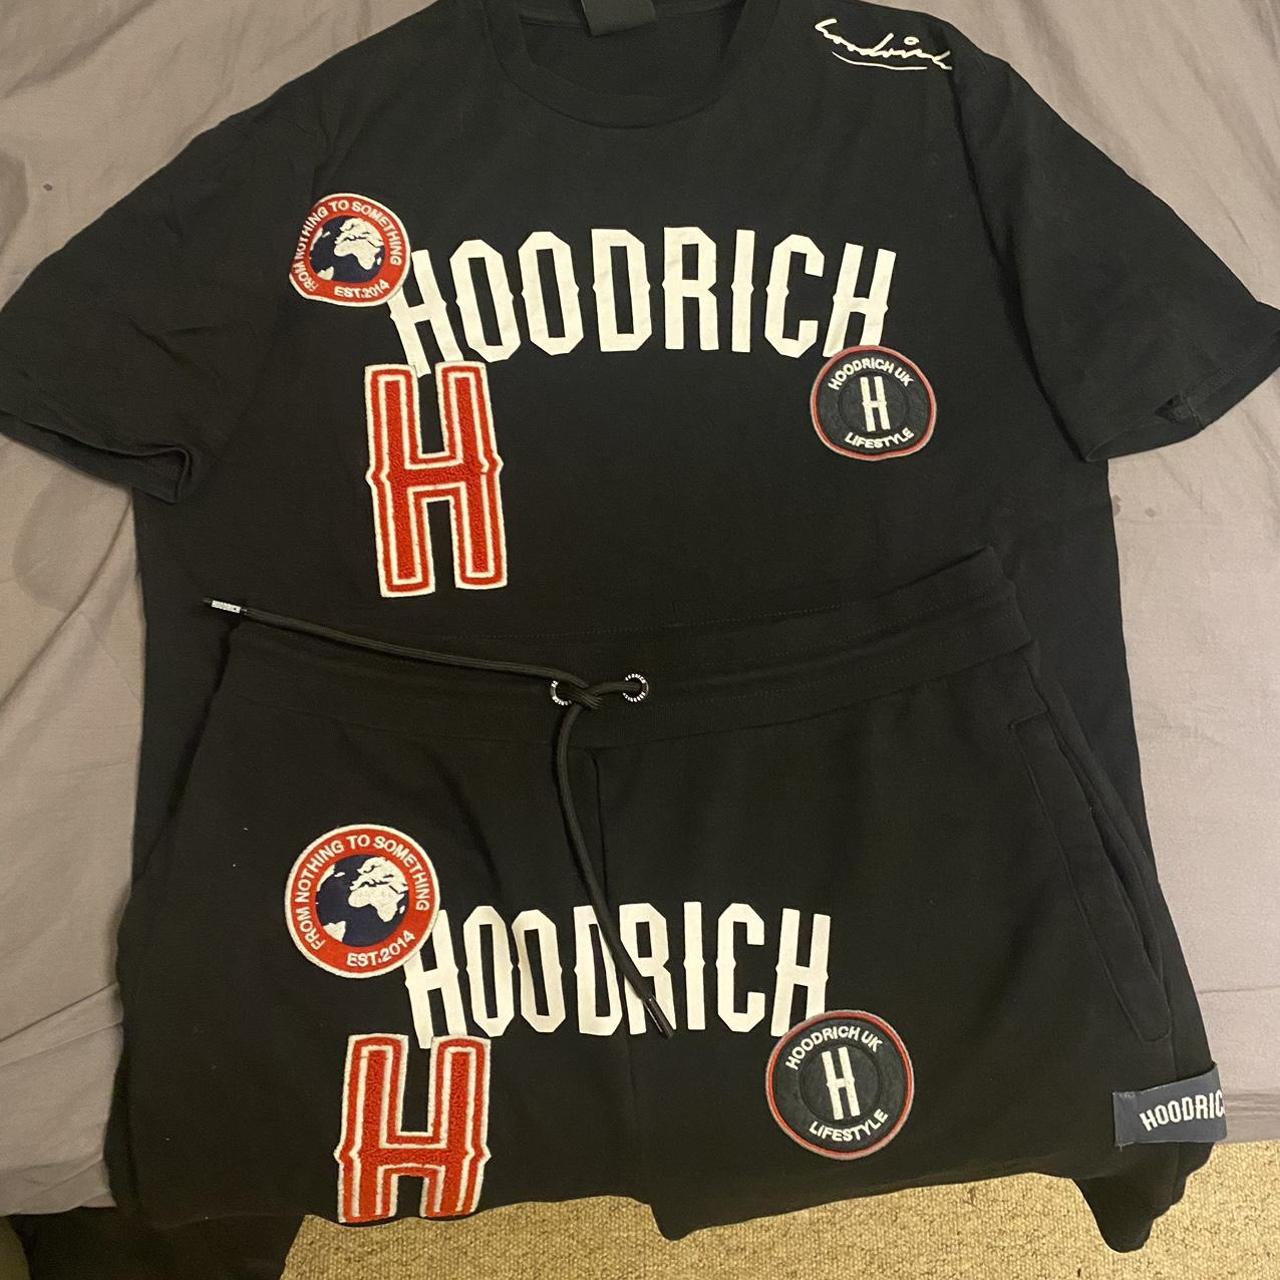 Hoodrich Men's Black and Red T-shirt | Depop